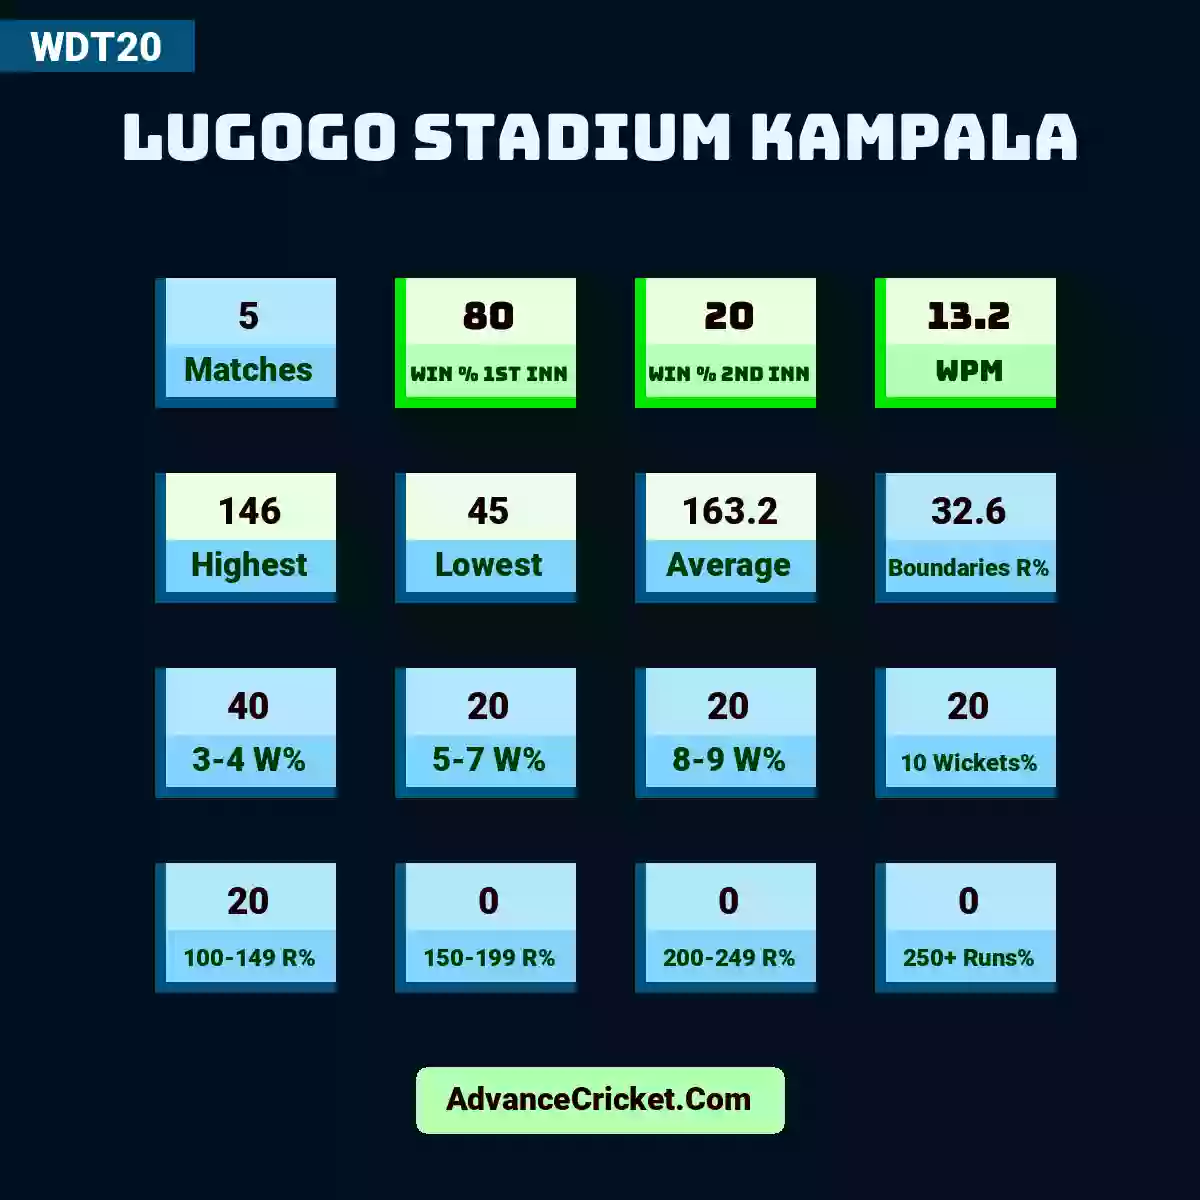 Image showing Lugogo Stadium Kampala with Matches: 5, Win % 1st Inn: 80, Win % 2nd Inn: 20, WPM: 13.2, Highest: 146, Lowest: 45, Average: 163.2, Boundaries R%: 32.6, 3-4 W%: 40, 5-7 W%: 20, 8-9 W%: 20, 10 Wickets%: 20, 100-149 R%: 20, 150-199 R%: 0, 200-249 R%: 0, 250+ Runs%: 0.